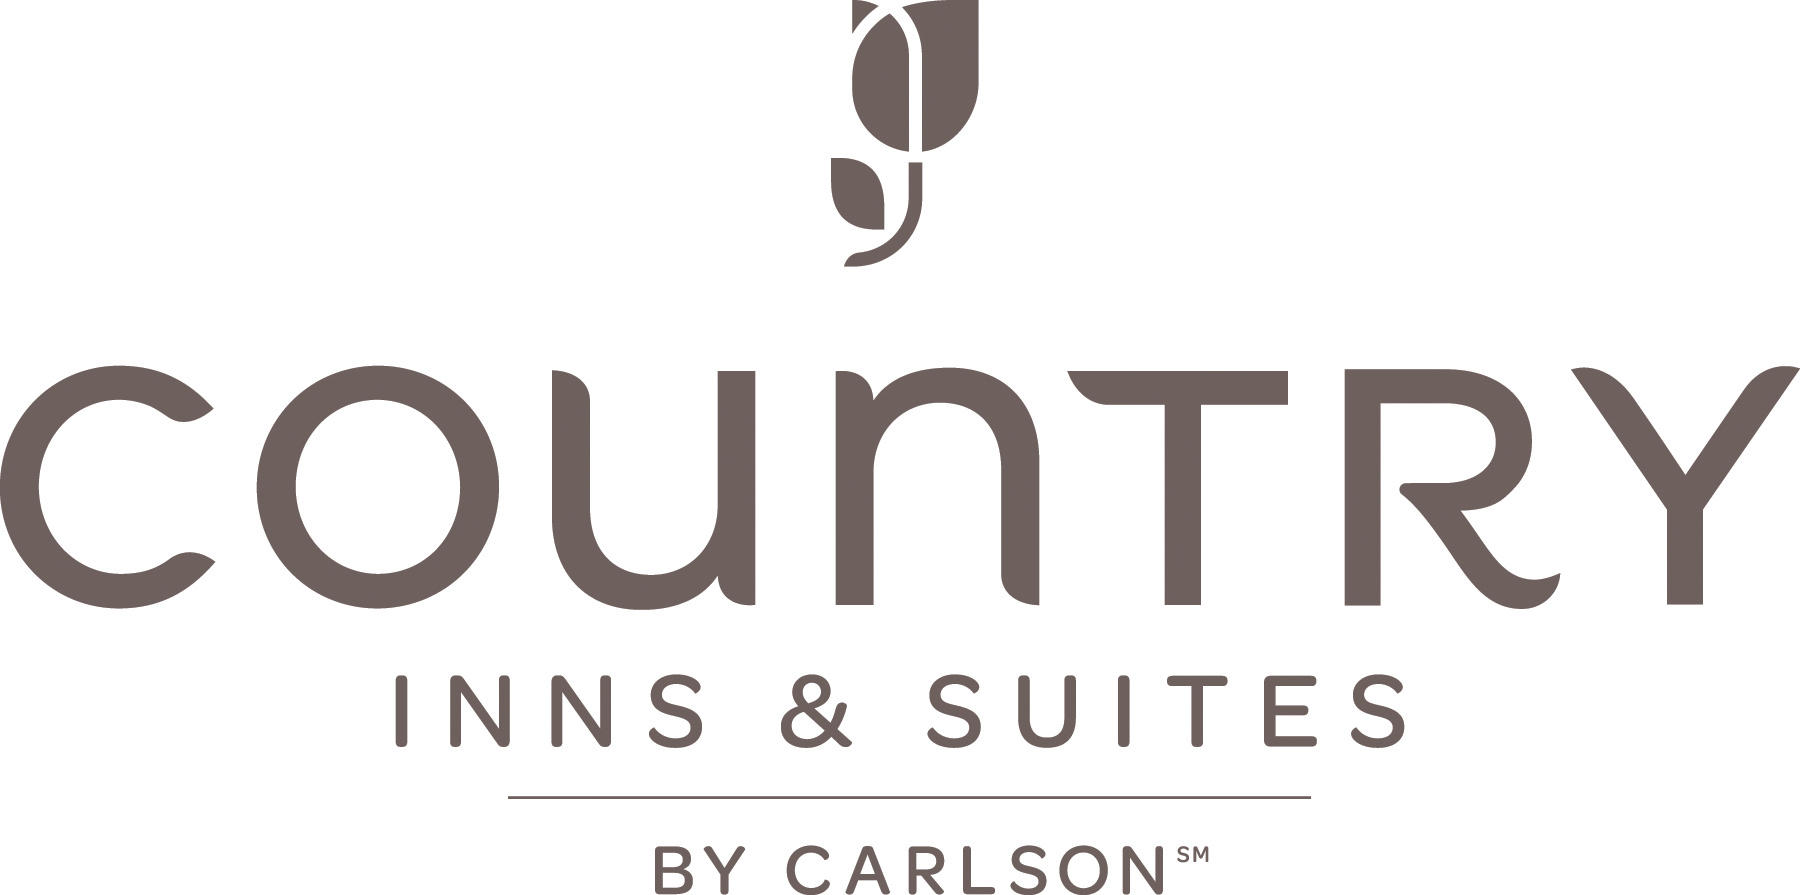 Country Inn & Suites By Carlson, San Diego North, CA logo